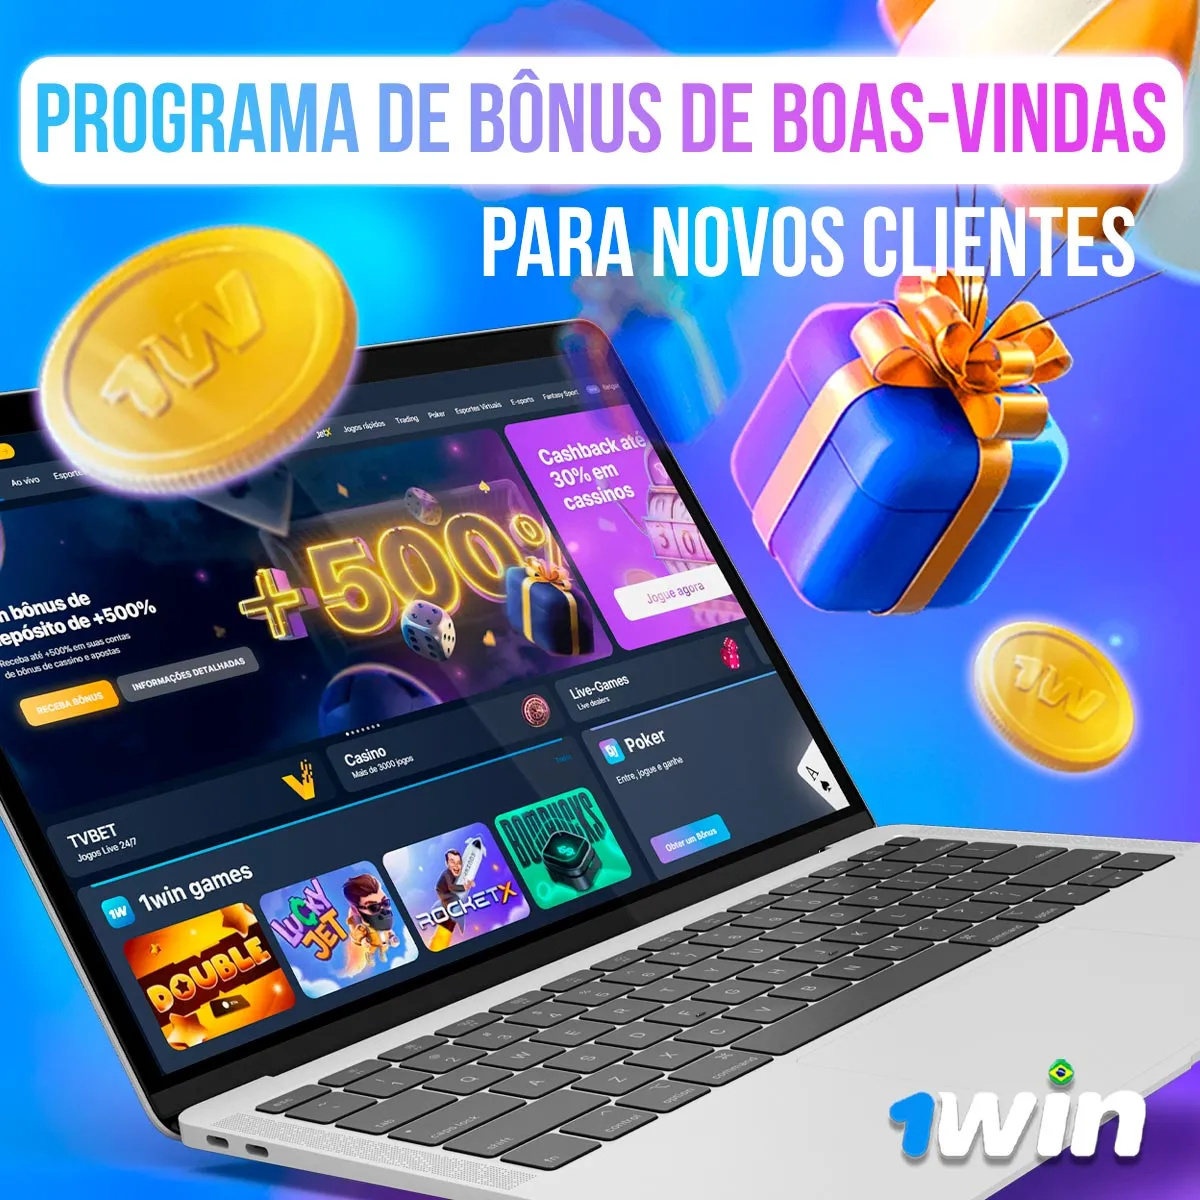 Programa de bônus para novos clientes da 1win no mercado brasileiro